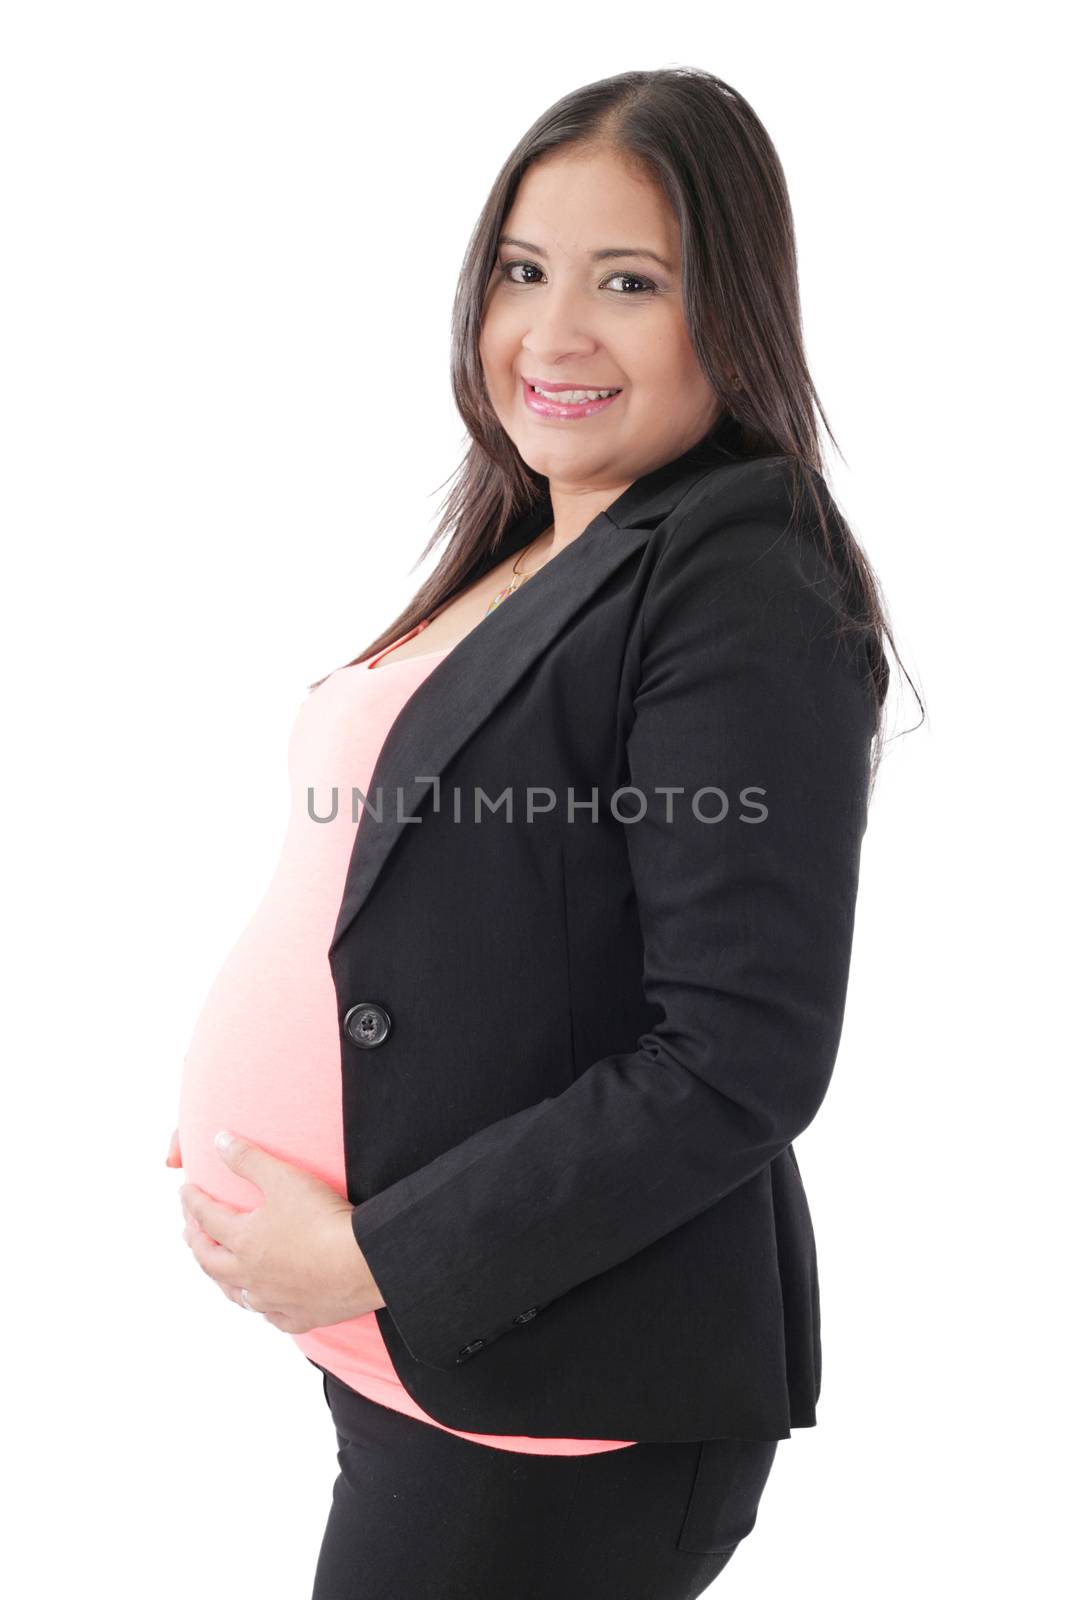 Pregnant business woman by dacasdo